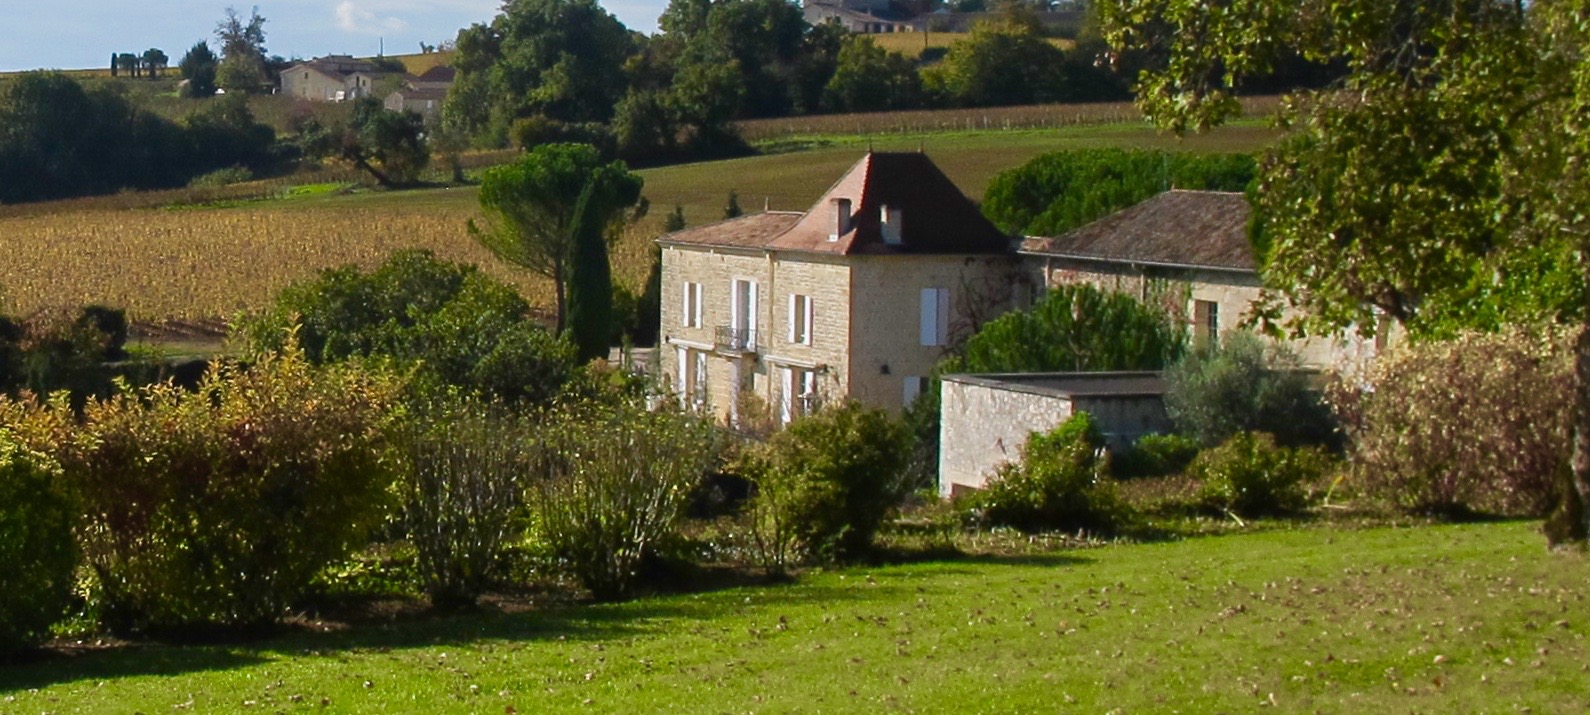 Château Barde-Haut - where Hélène, Patrice and their son Louis make their home - is located near iconic Saint-Émilion Chateaux Troplong Mondot and La Mondotte.